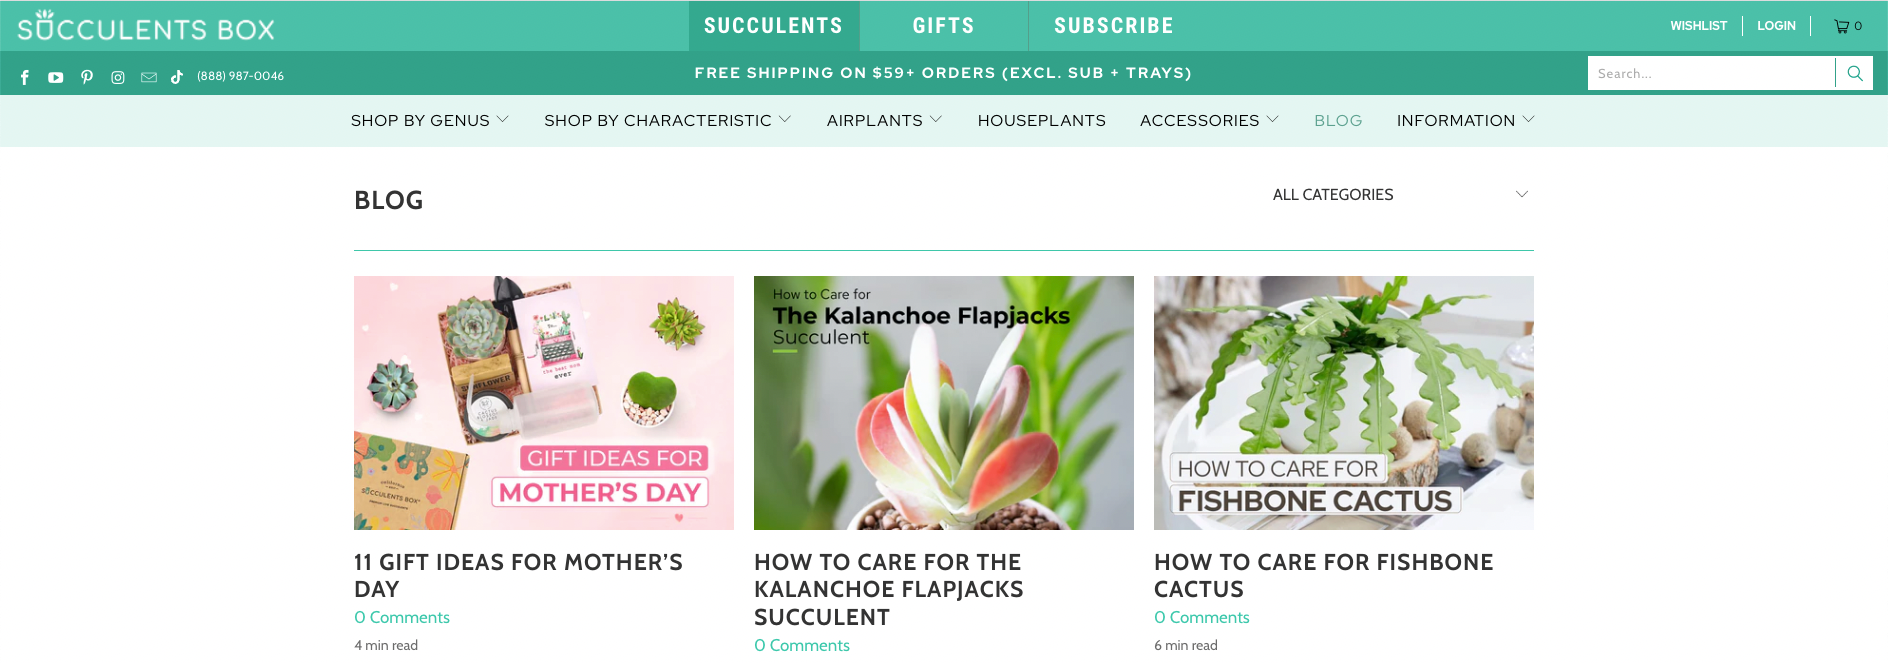 the succulents box blog